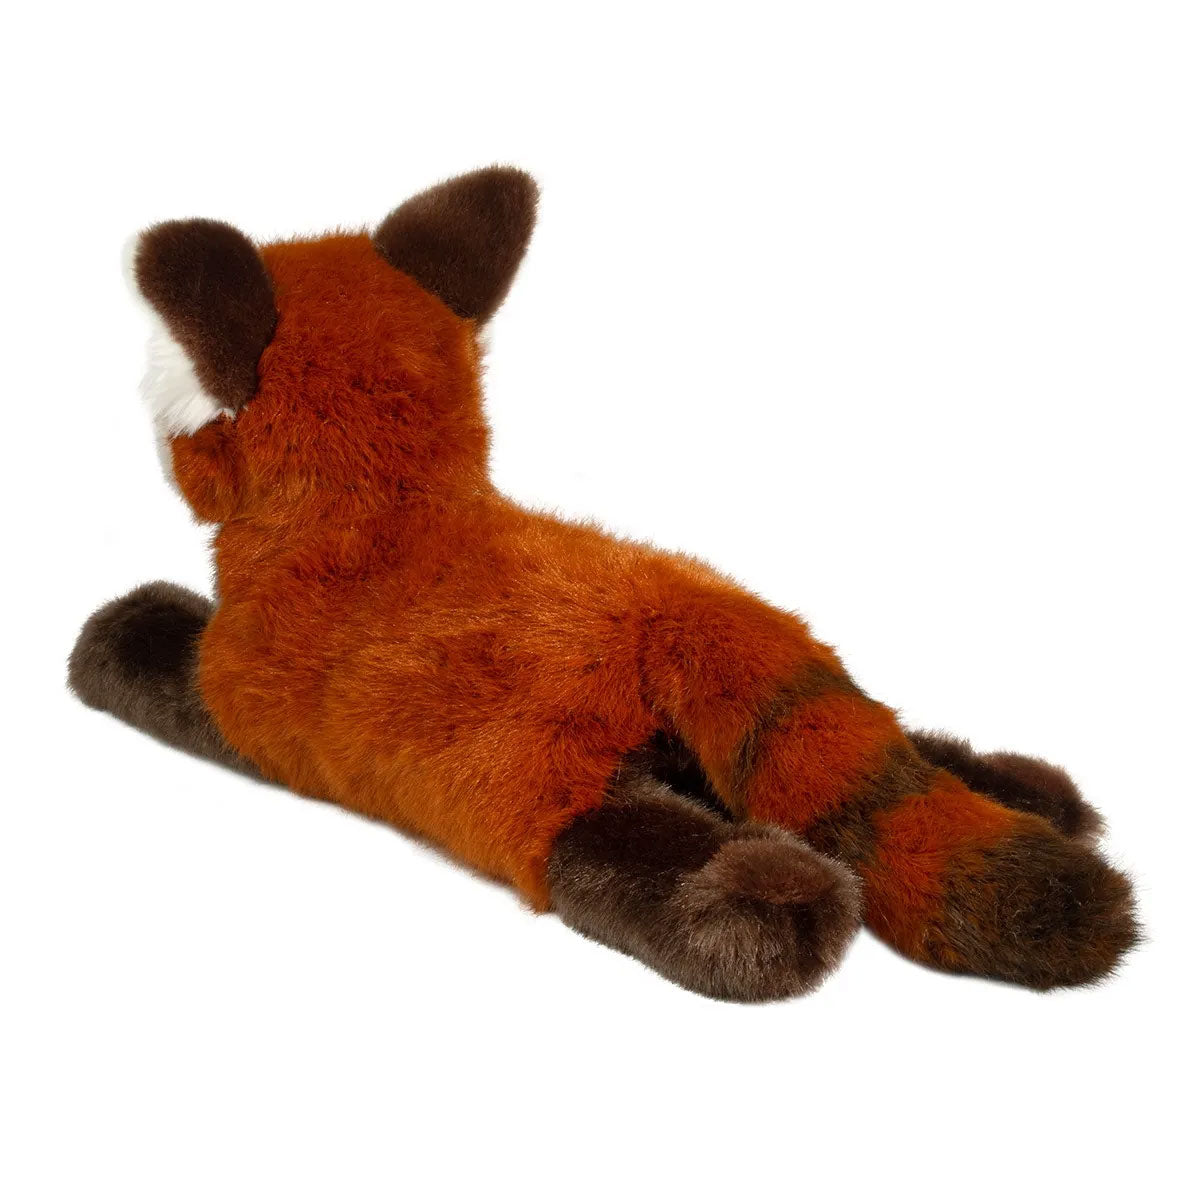 Rowan DLux Red Panda from Douglas Cuddle Toys